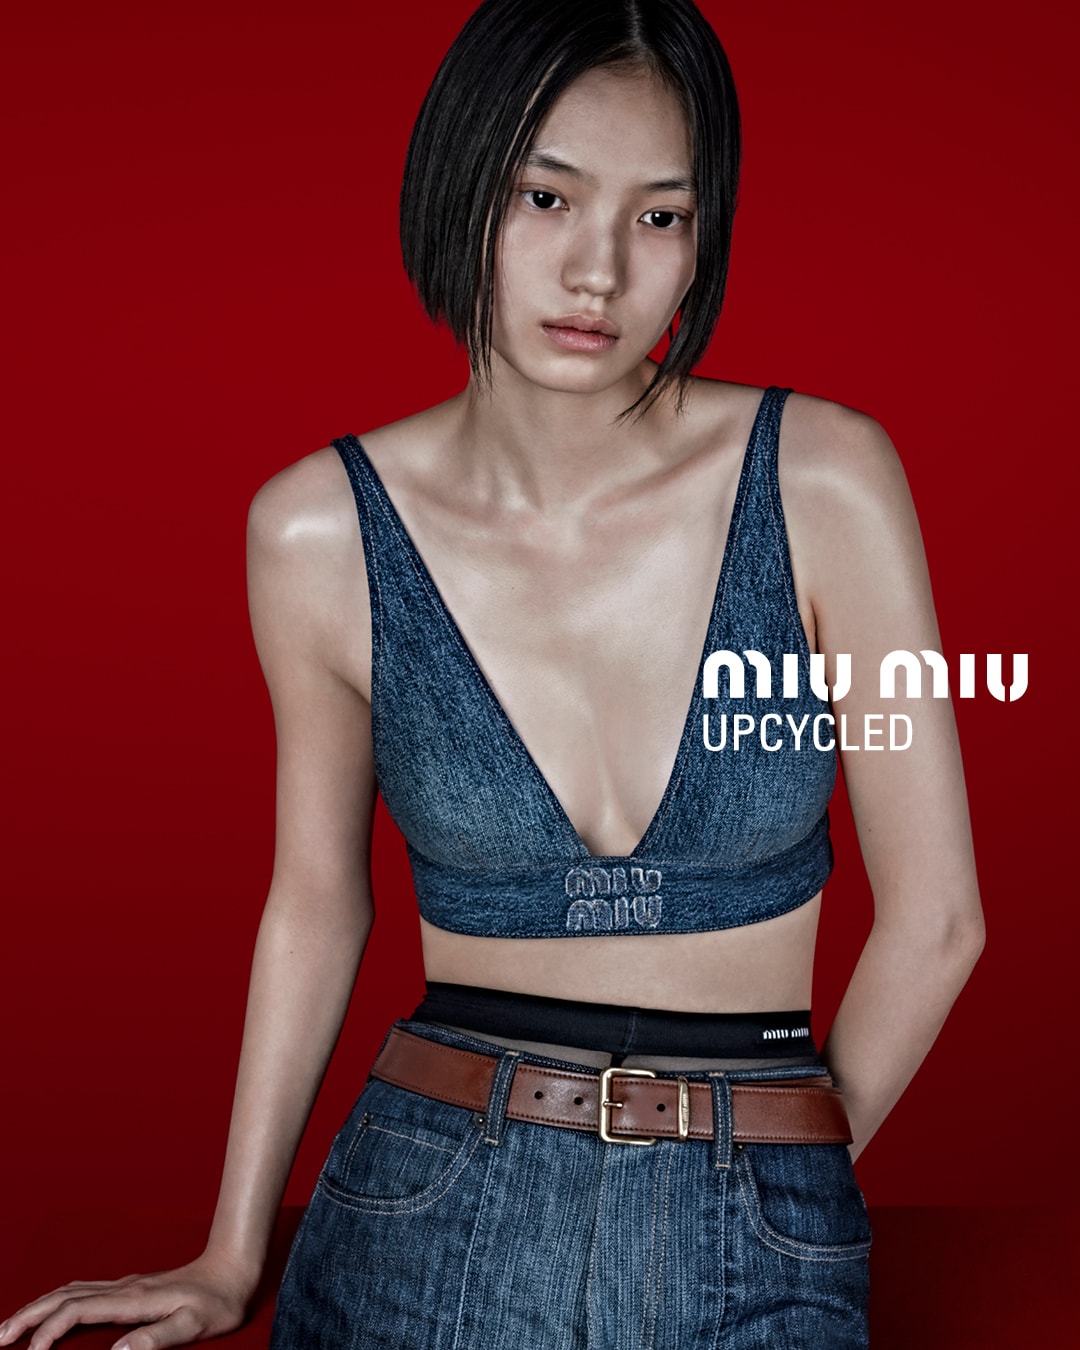 Miu Miu 全新 UPCYCLED 系列正式登場